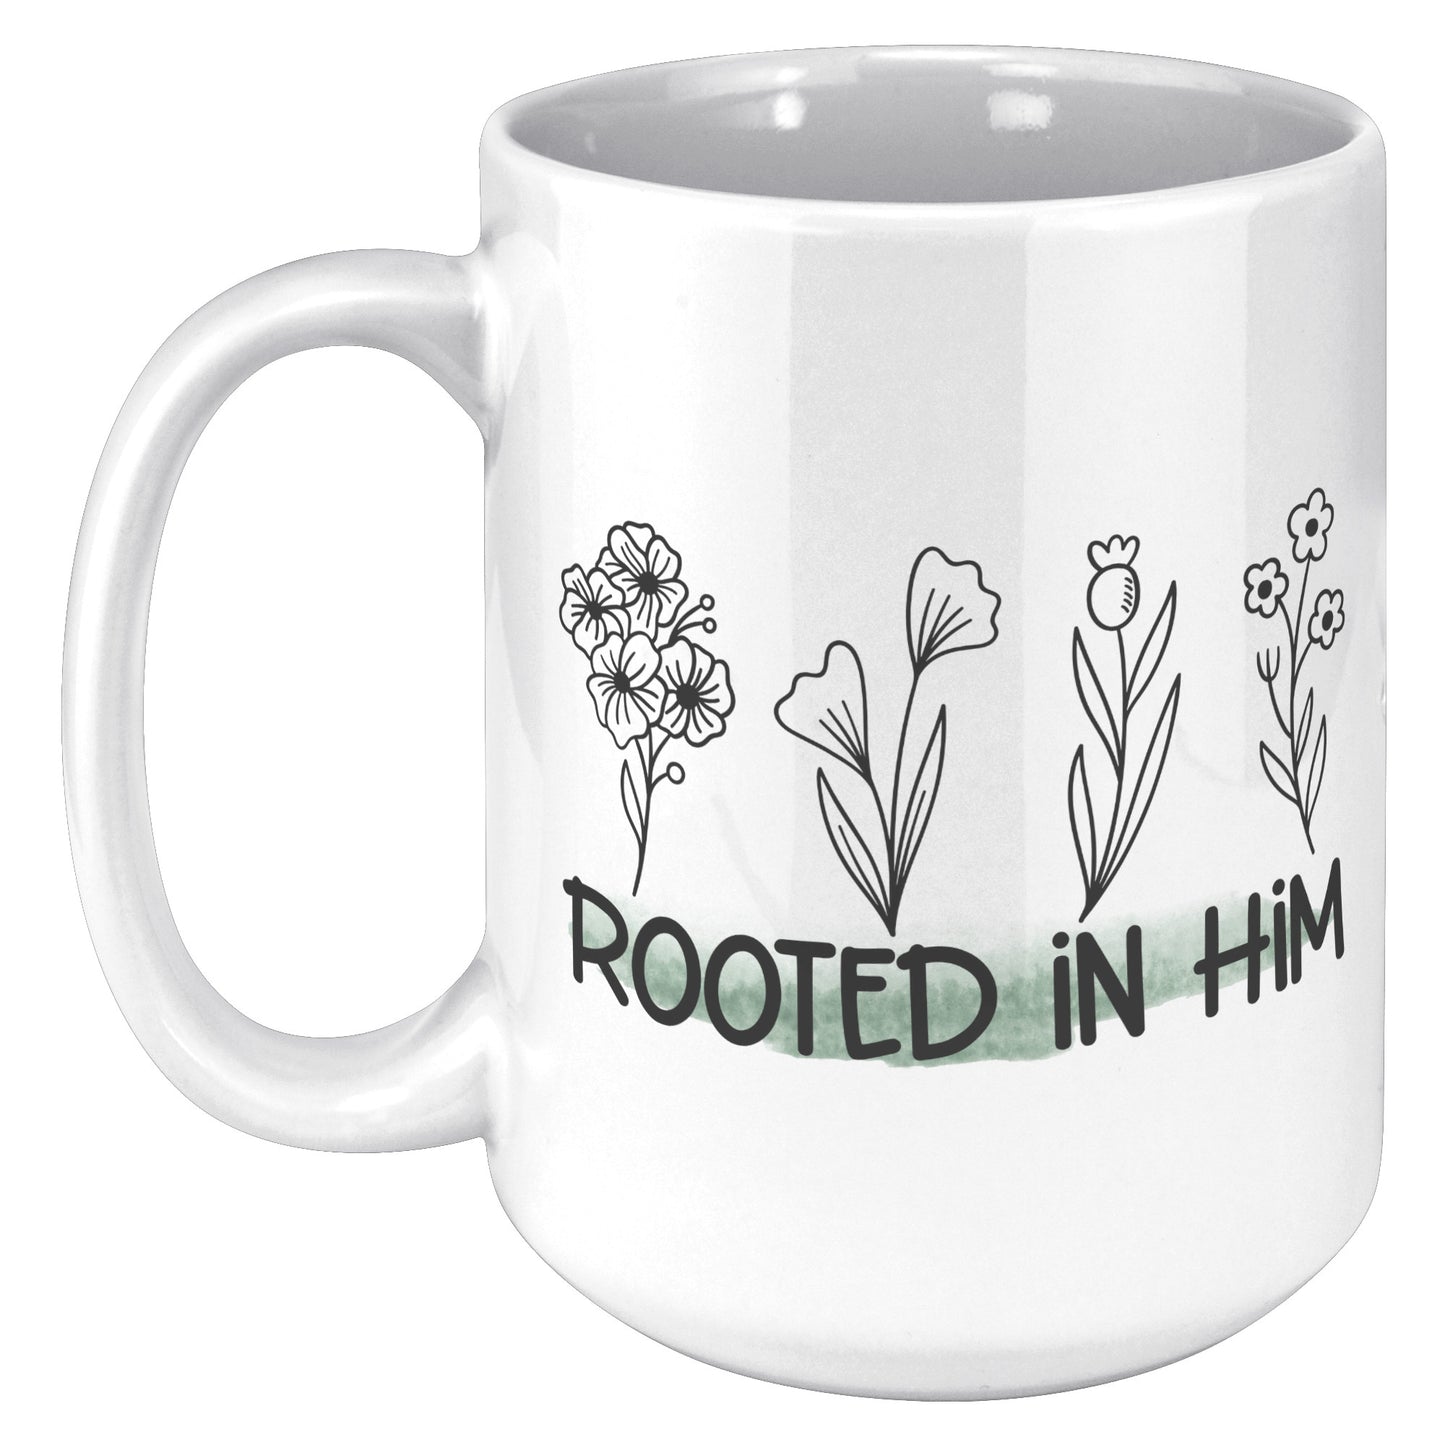 Rooted in Him 15 oz White Ceramic Mug